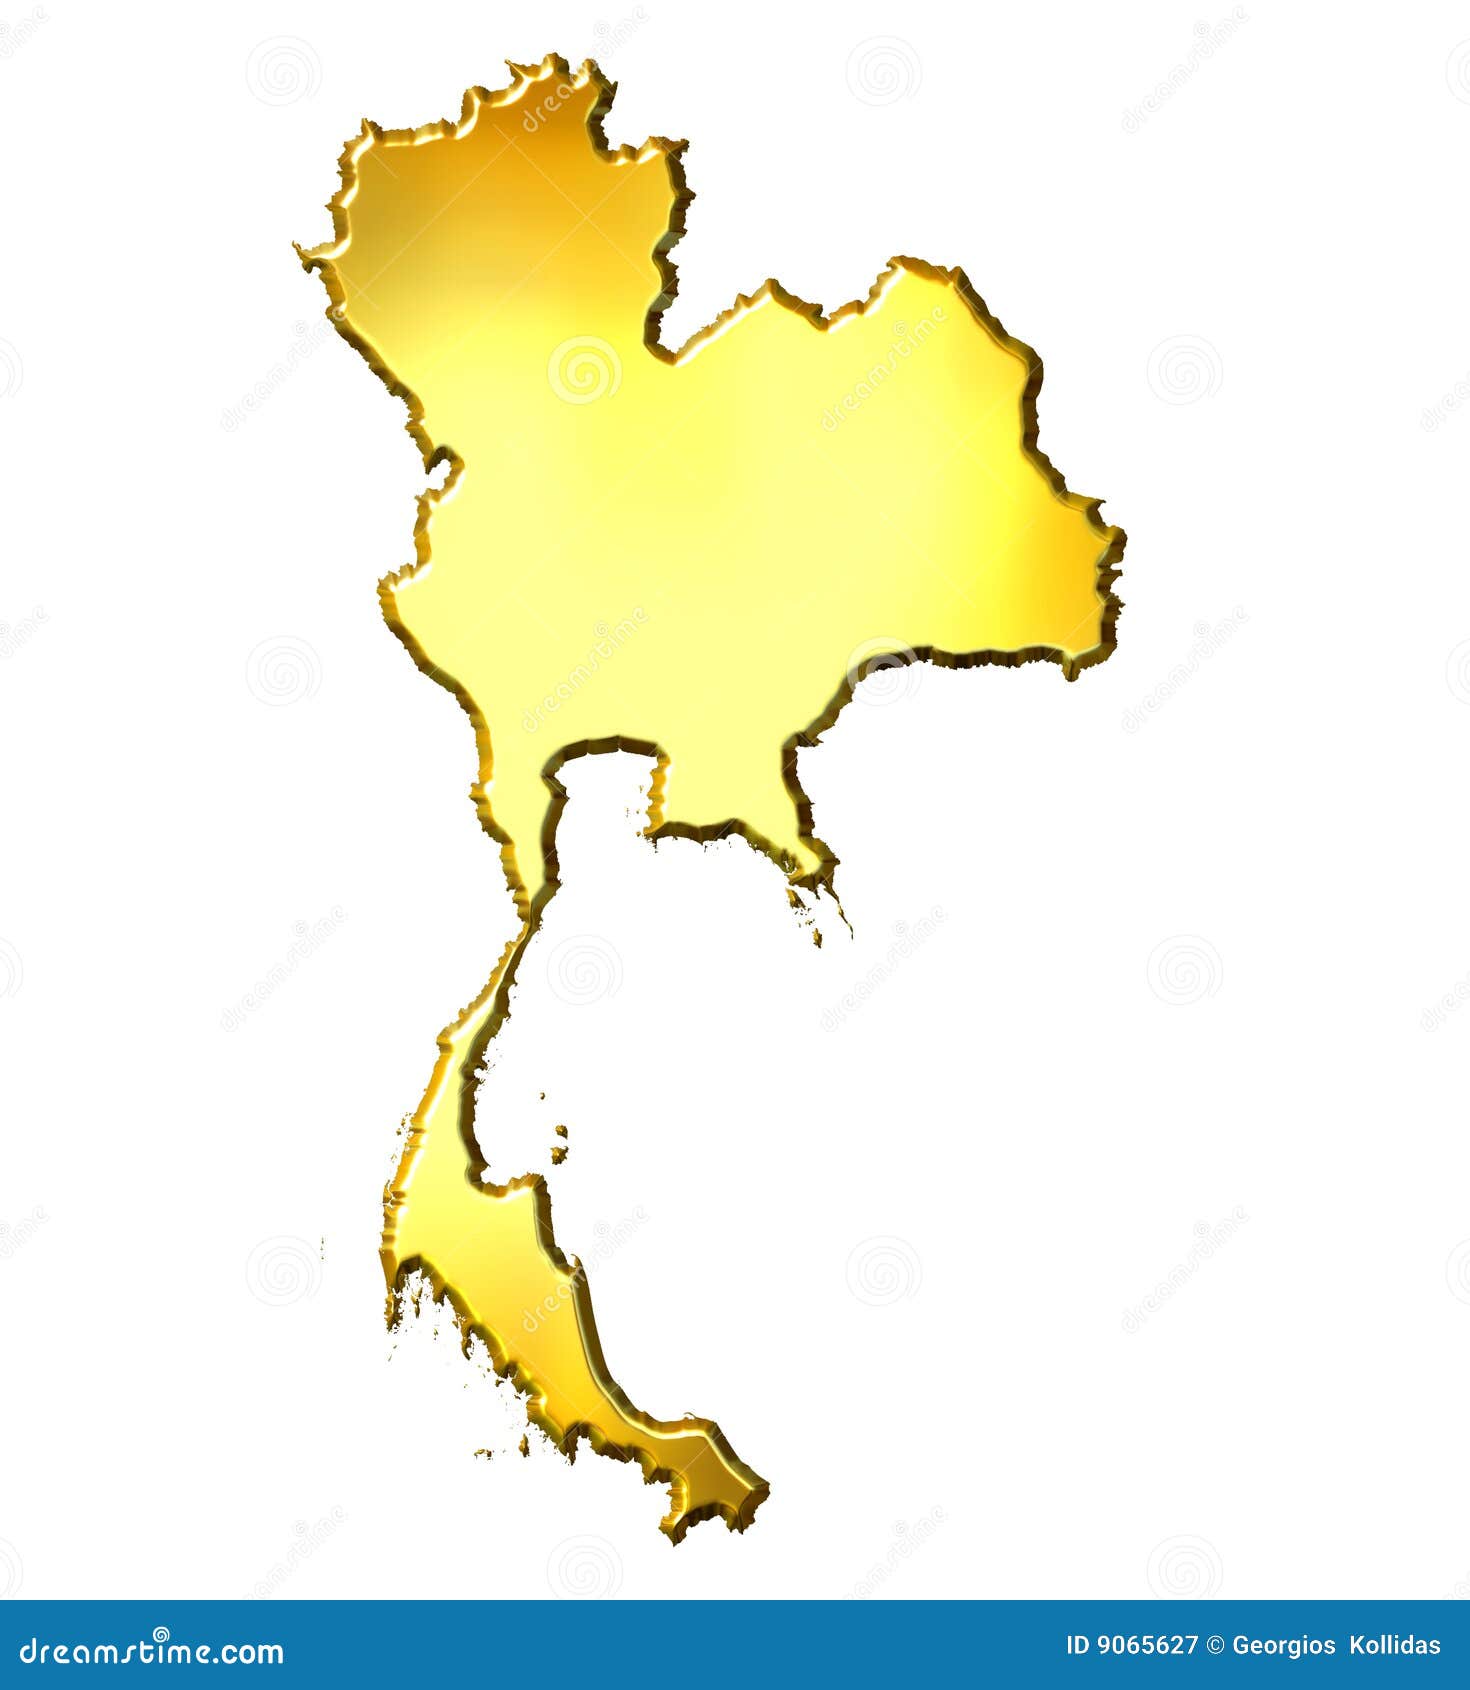 clipart thailand map - photo #3